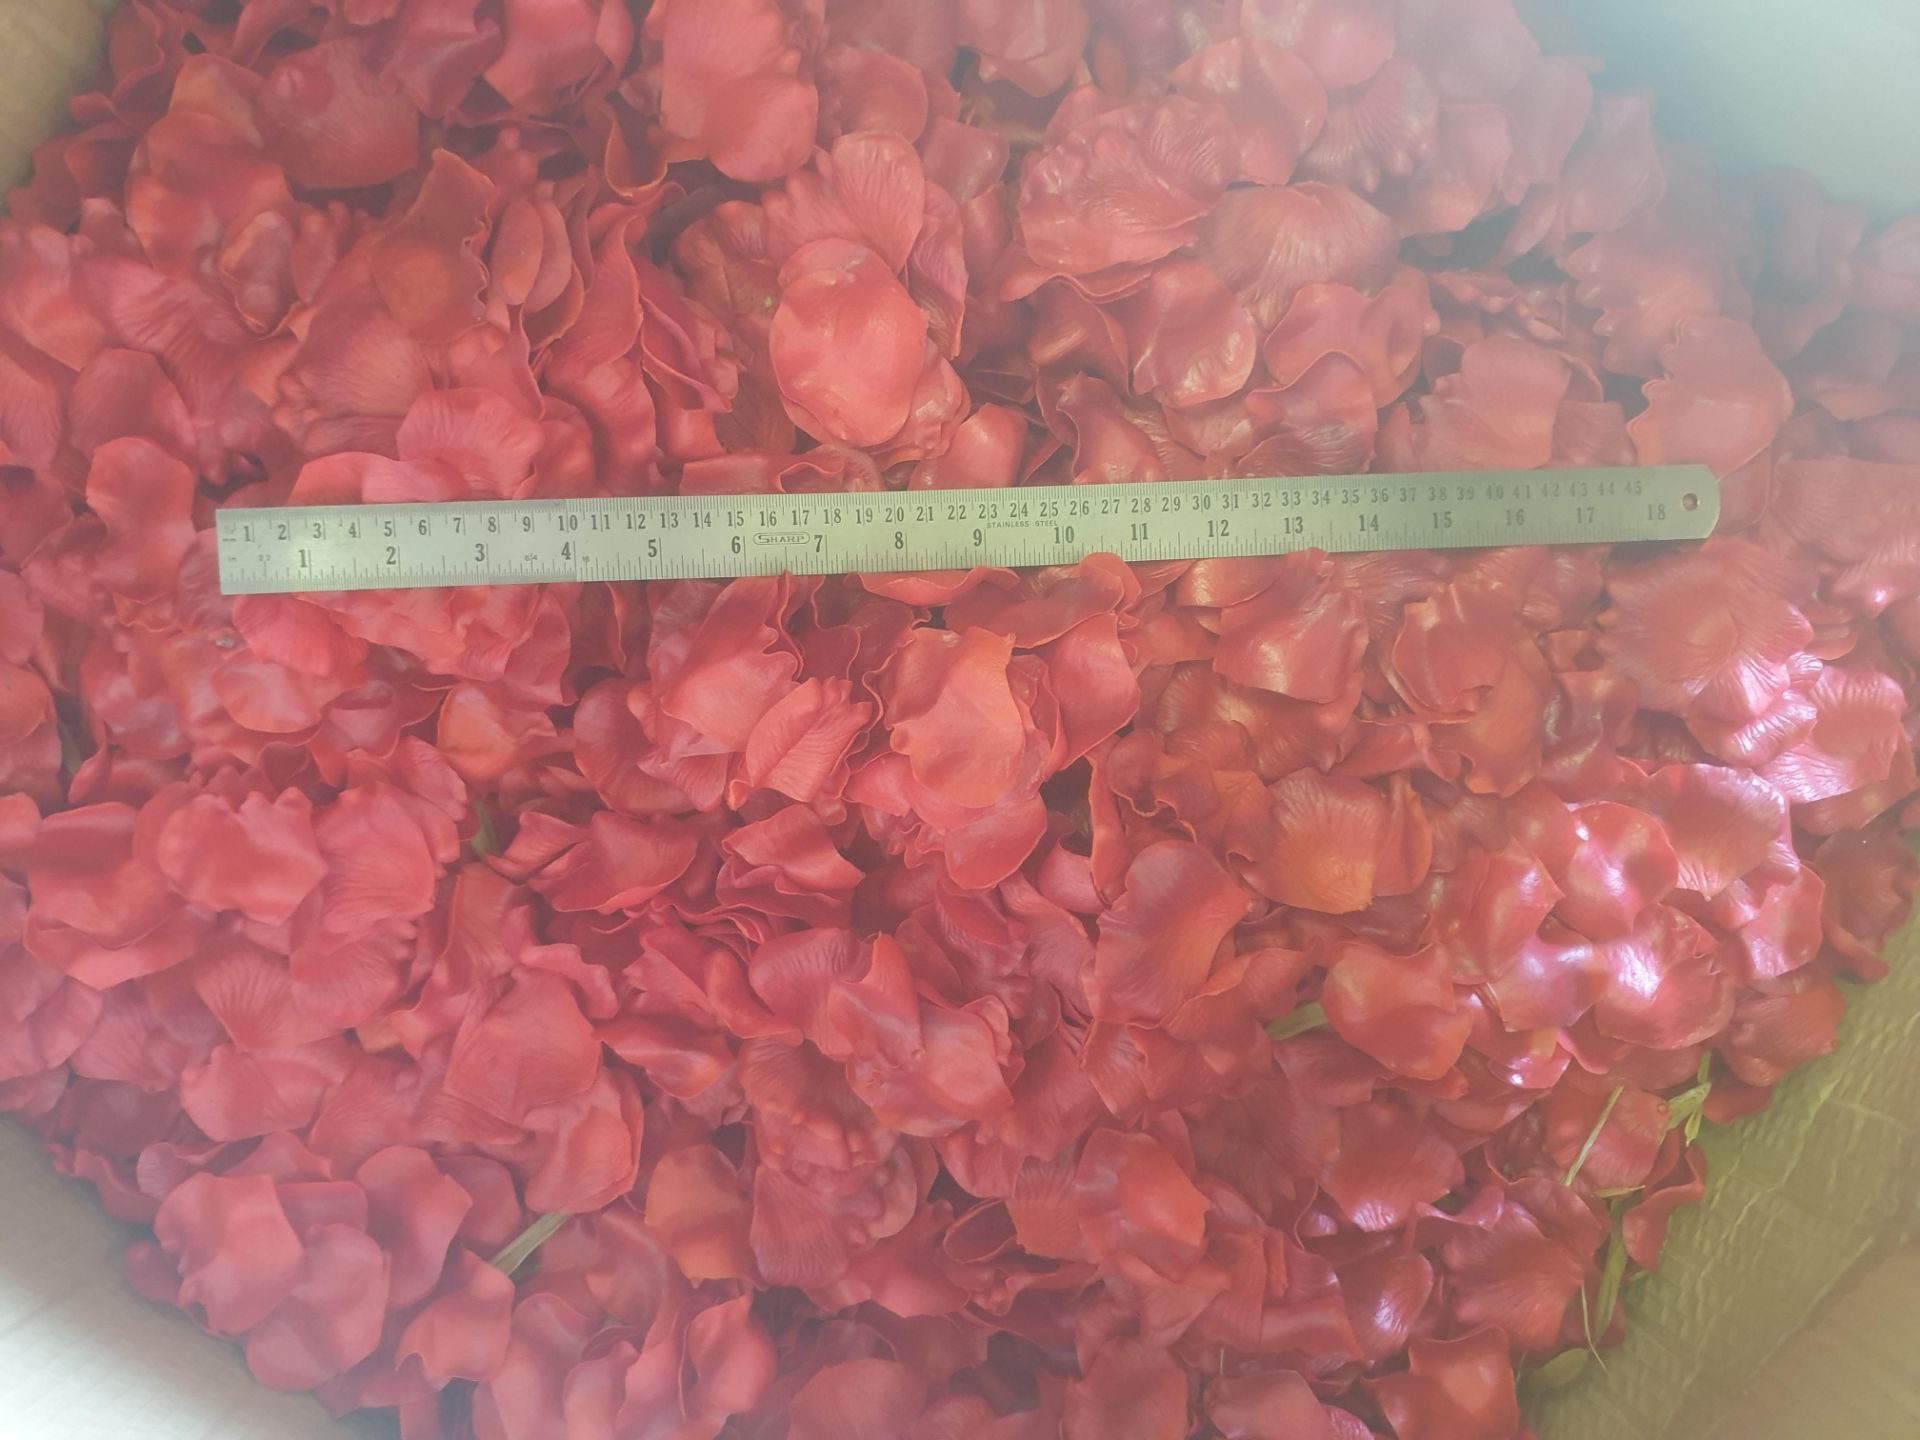 1 large box of loose Red rose petals